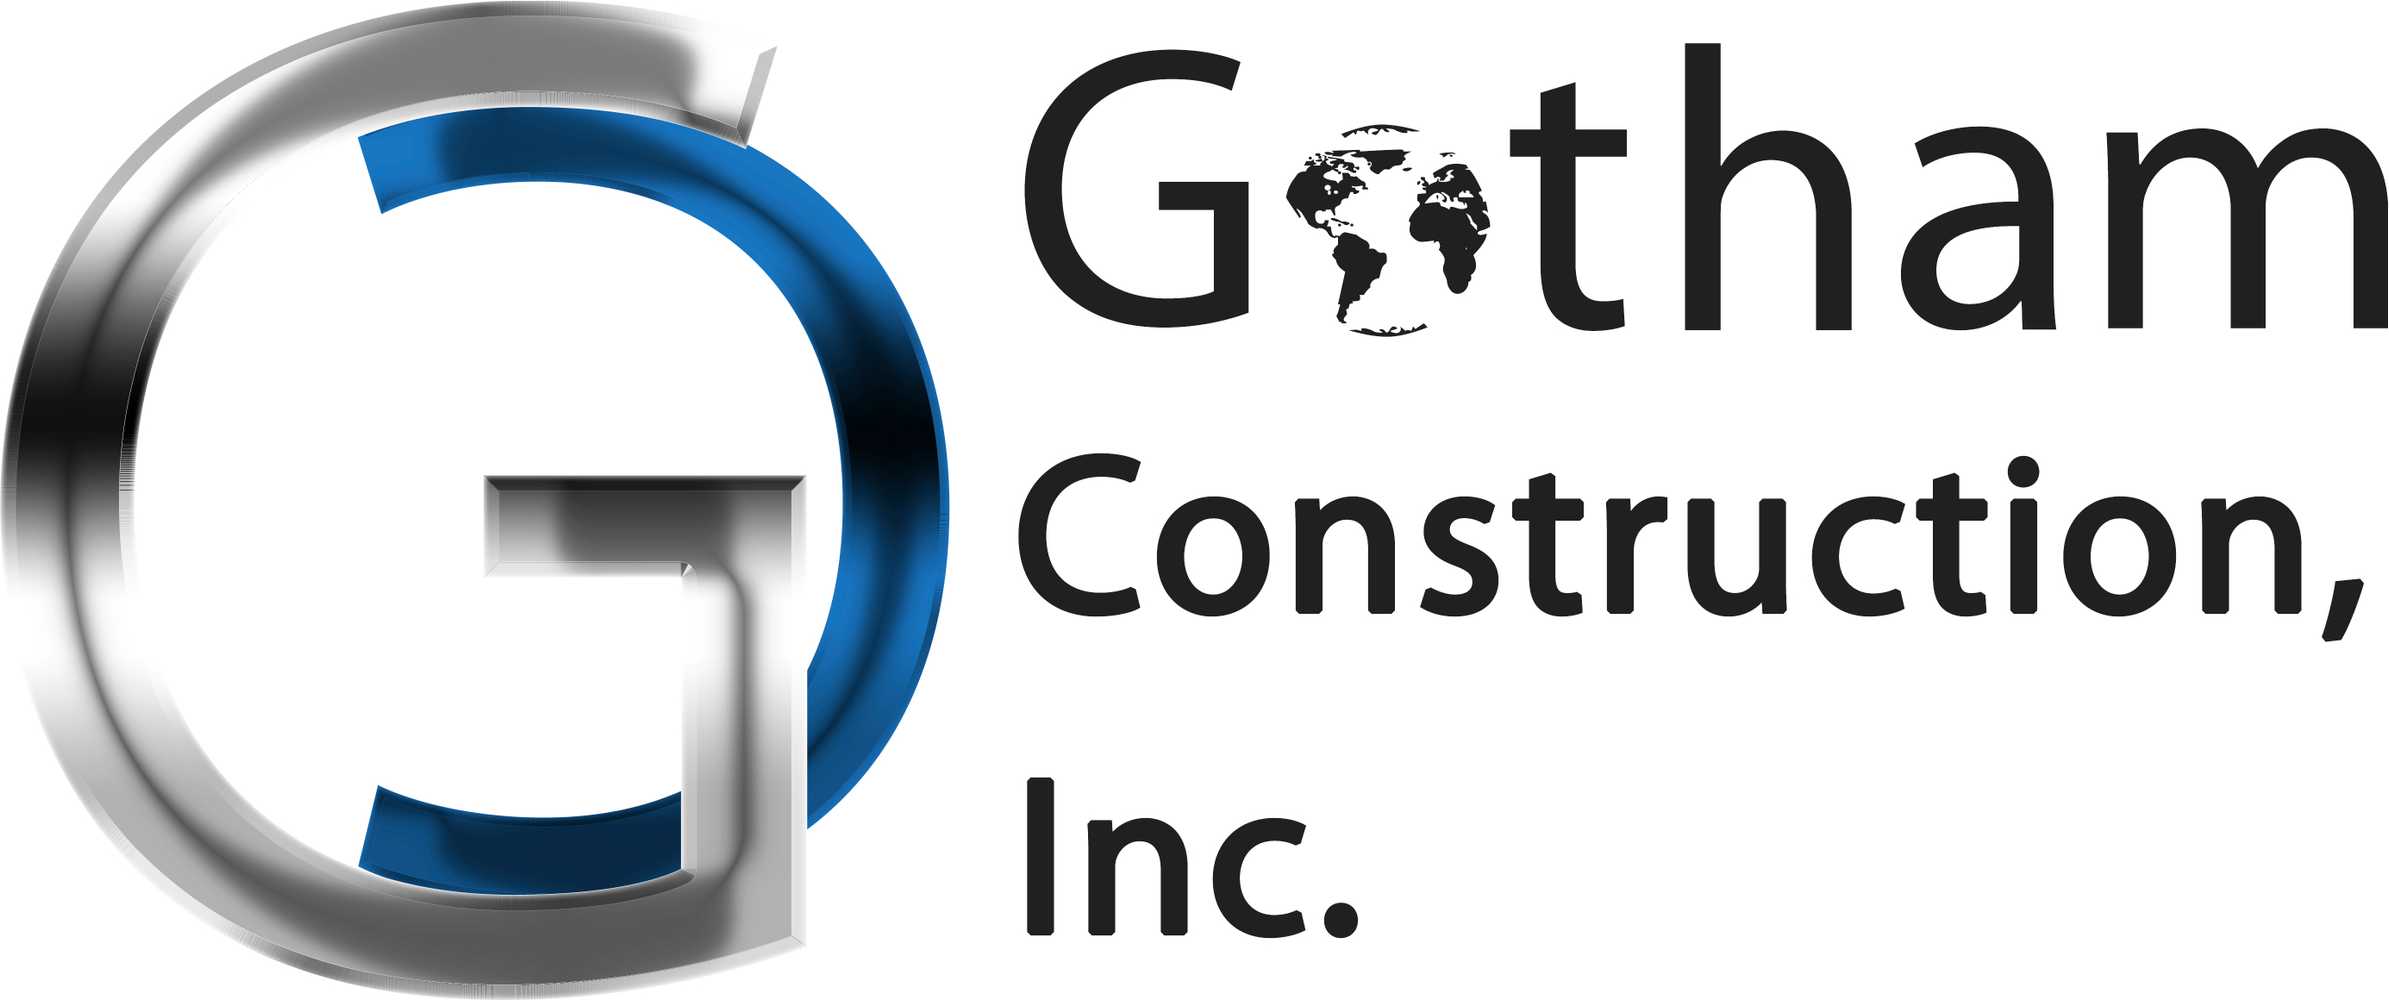 Gotham Construction Inc Project